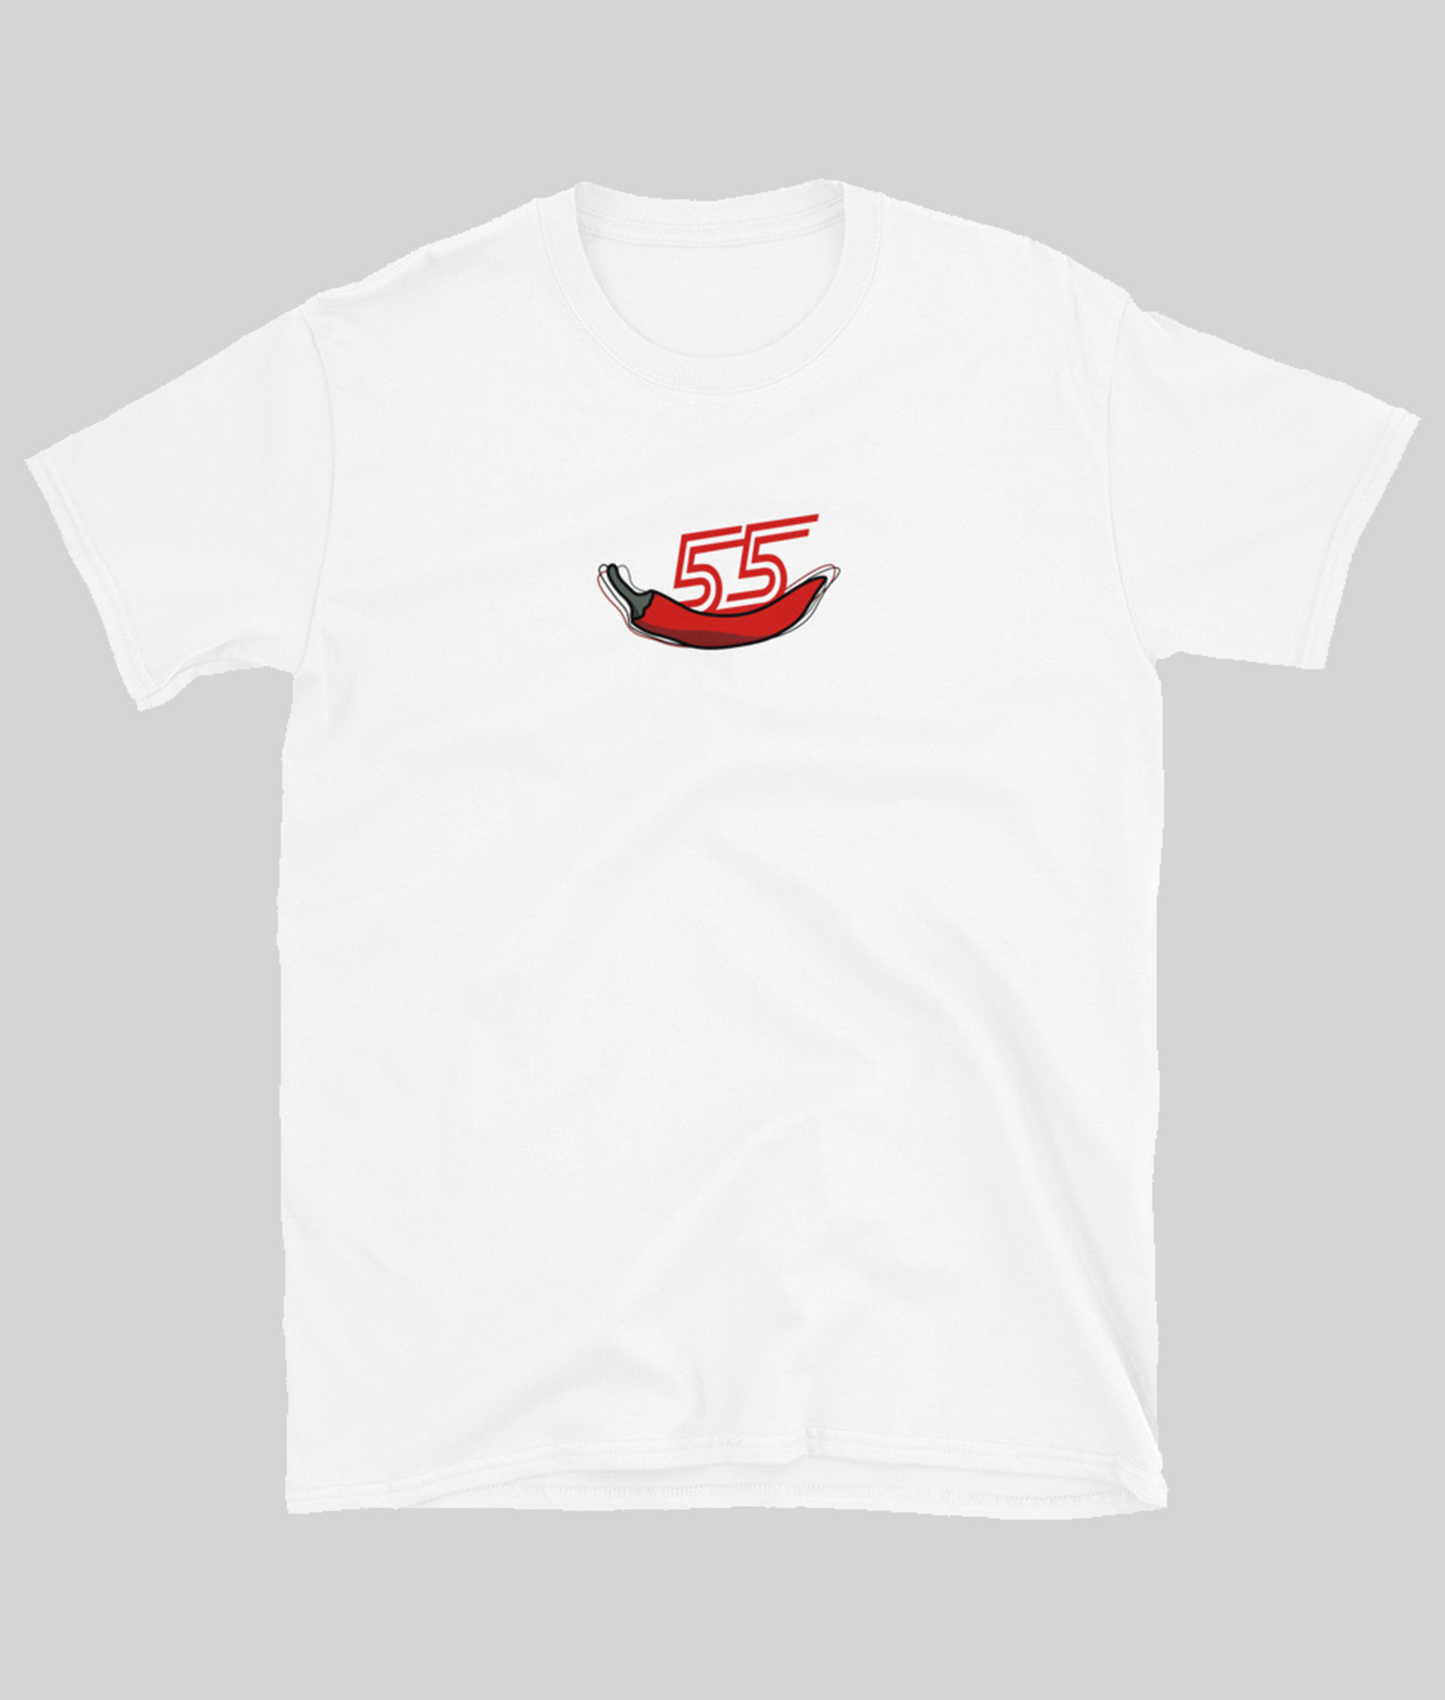 Carlos Sainz Chili 55 white t-shirt